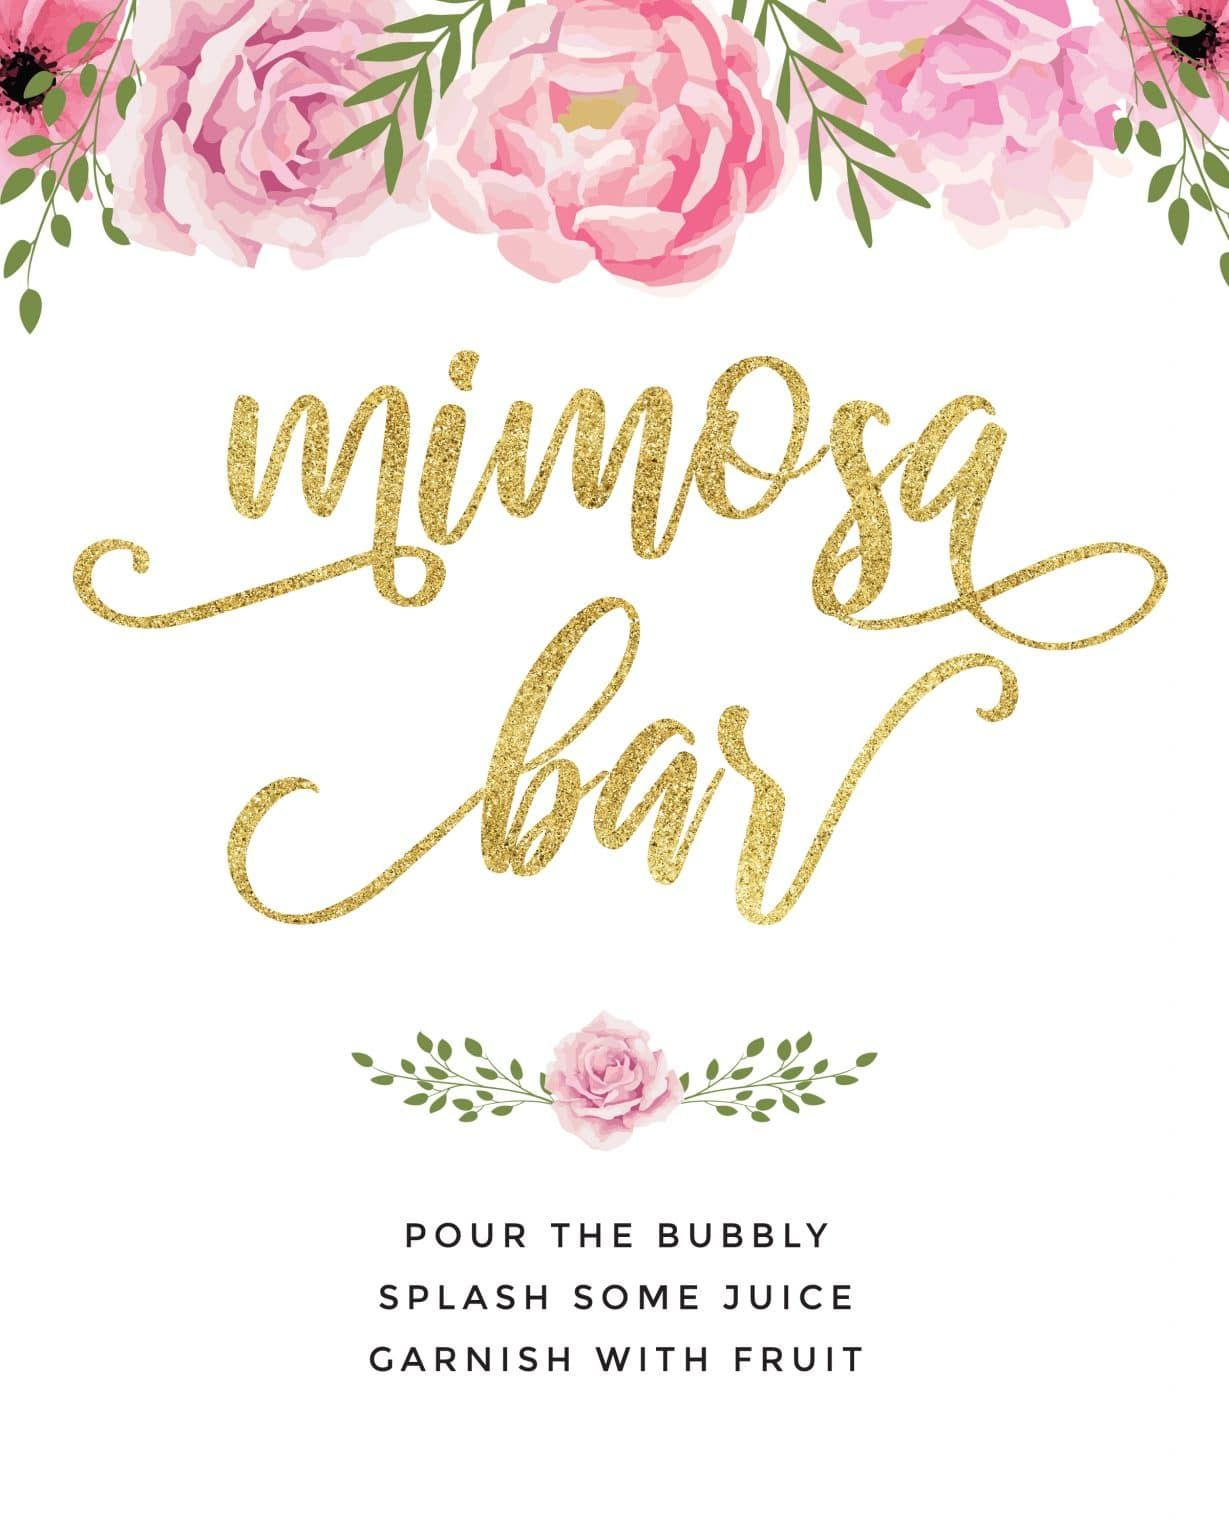 Diy Mimosa Bar Setup And Recipe Ideas intended for Free Mimosa Bar Printable